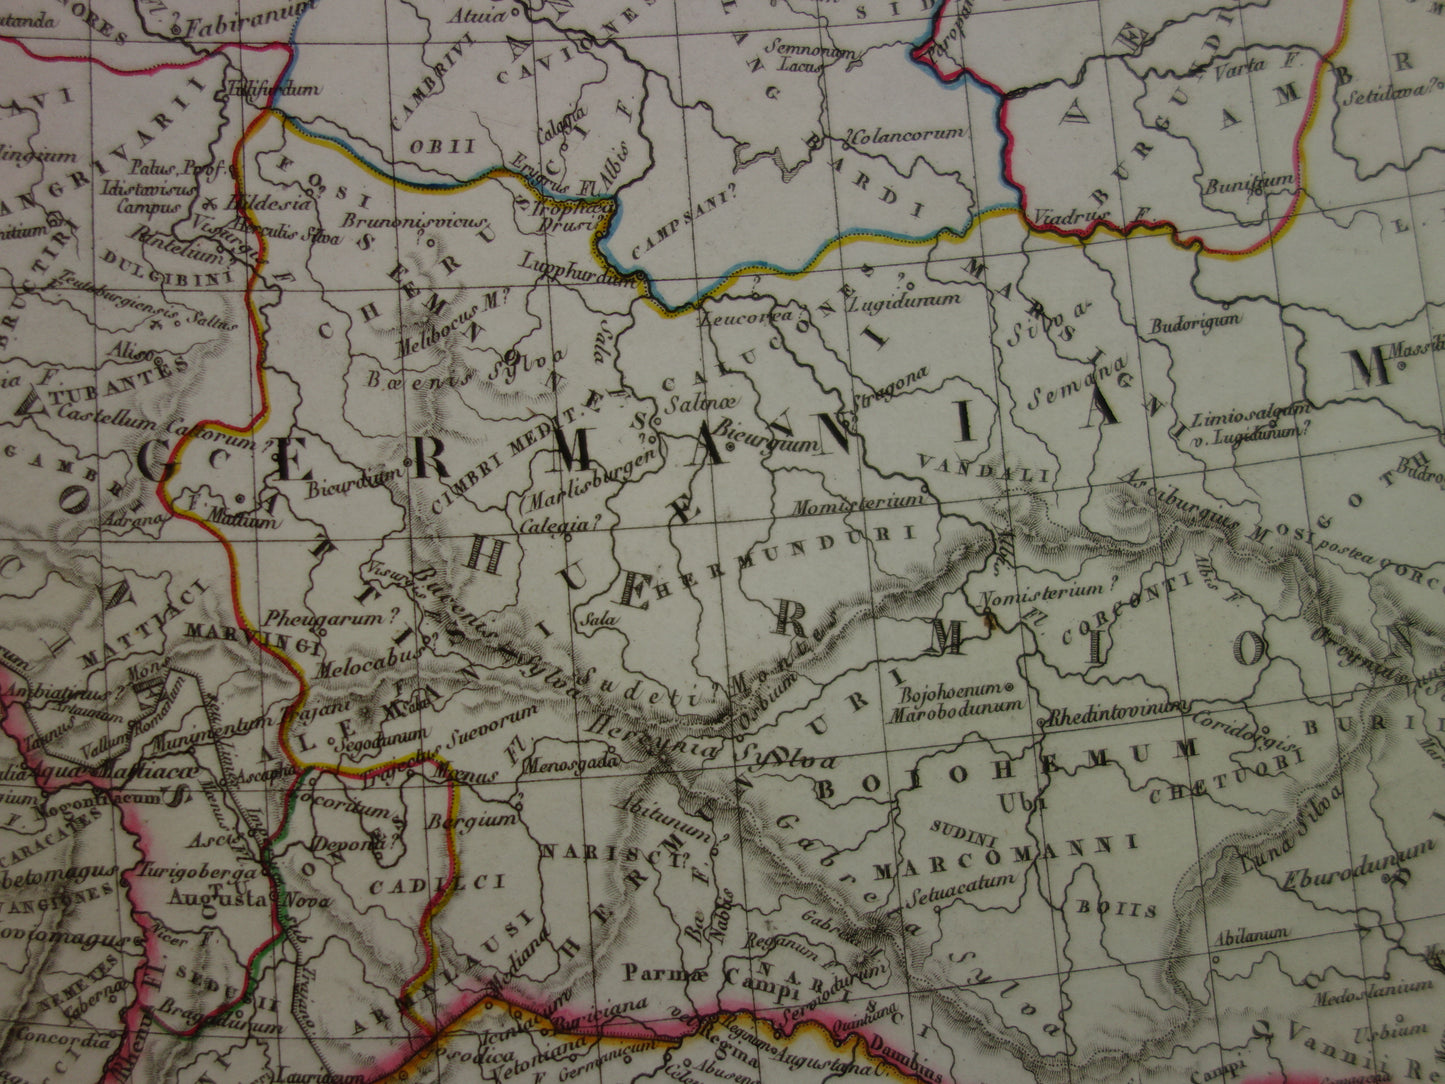 Grote oude landkaart van Groot-Brittanië en Duitsland in de Romeinse tijd 1827 originele antieke handgekleurde kaart poster van Romeinse Rijk Brittannia Hibernia Germania